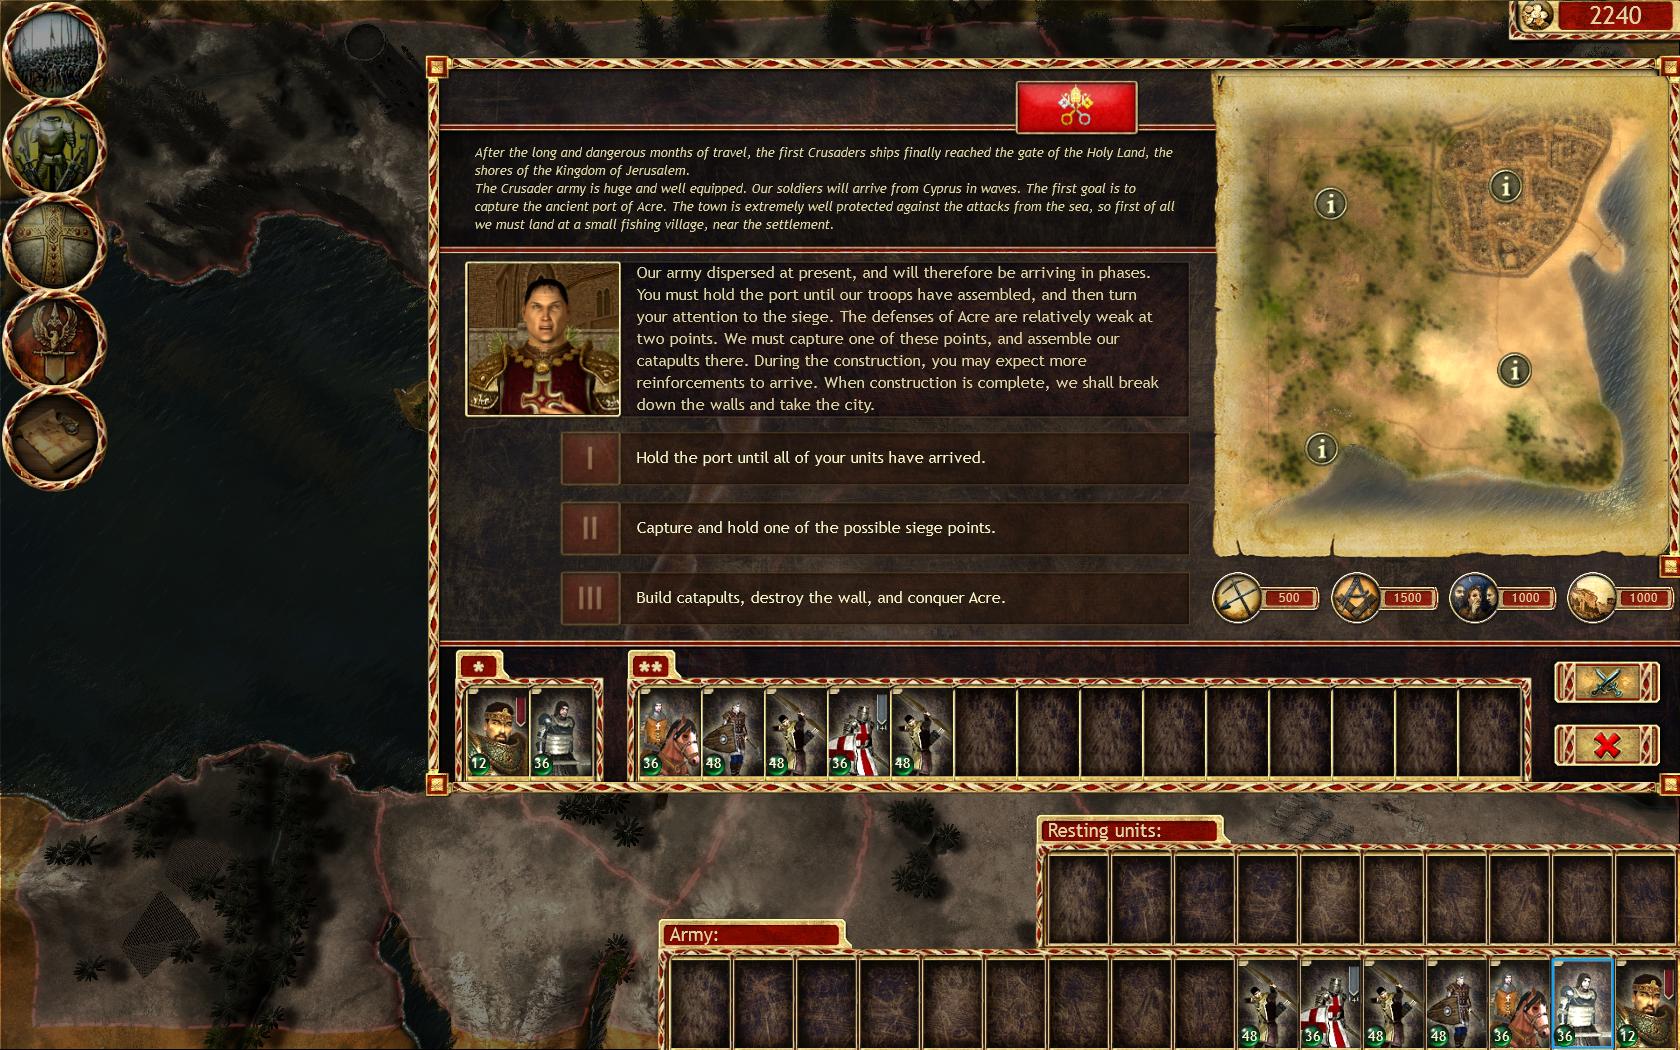 Lionheart: King's Crusade Epizodick misie sa skladaj z niekokch loh na bojisku.